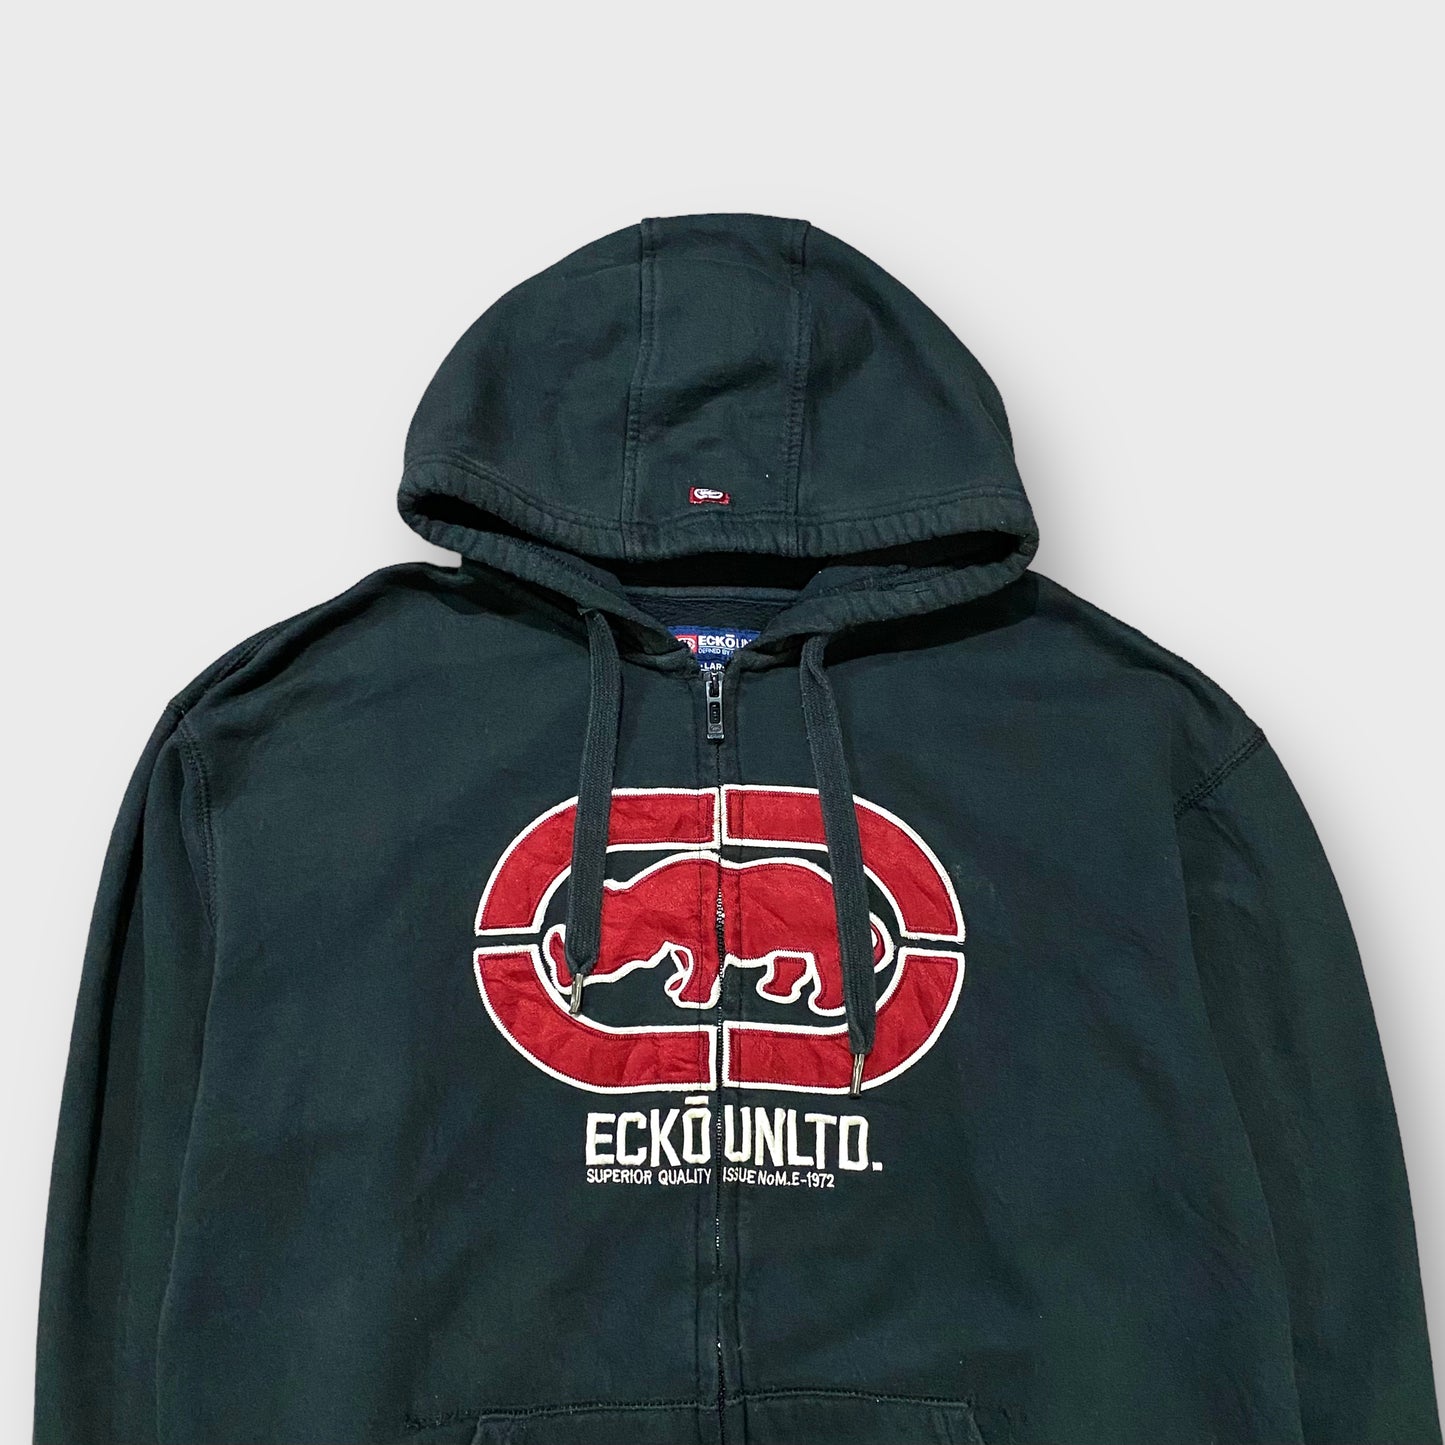 "ECKO UNLMTD" Logo design hoodie